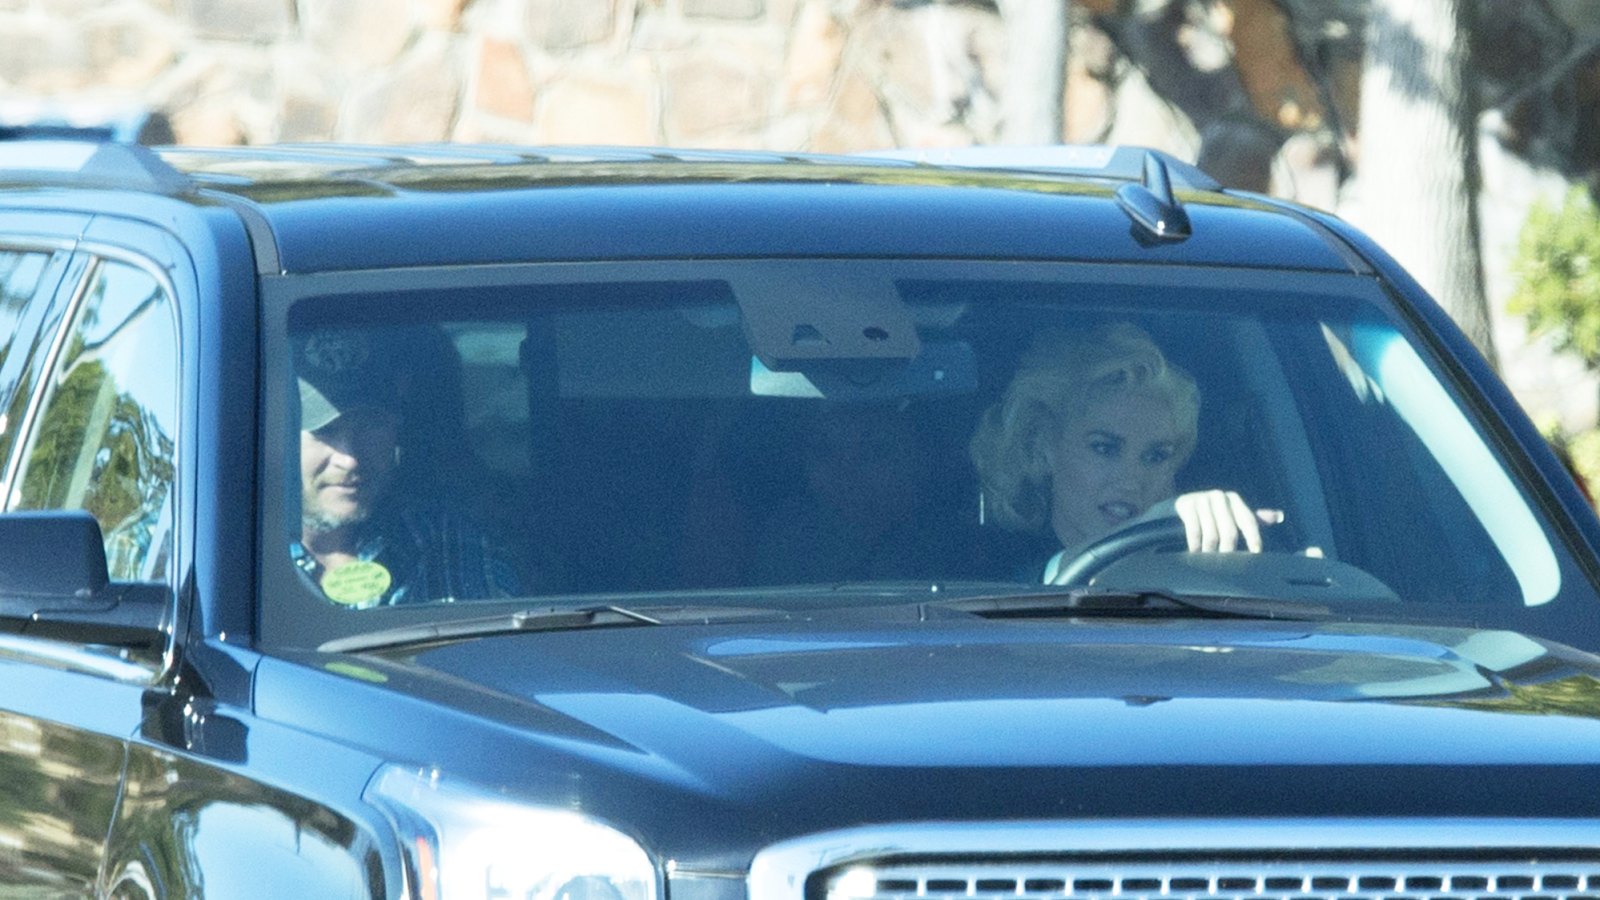 Gwen Stefani and Blake Shelton